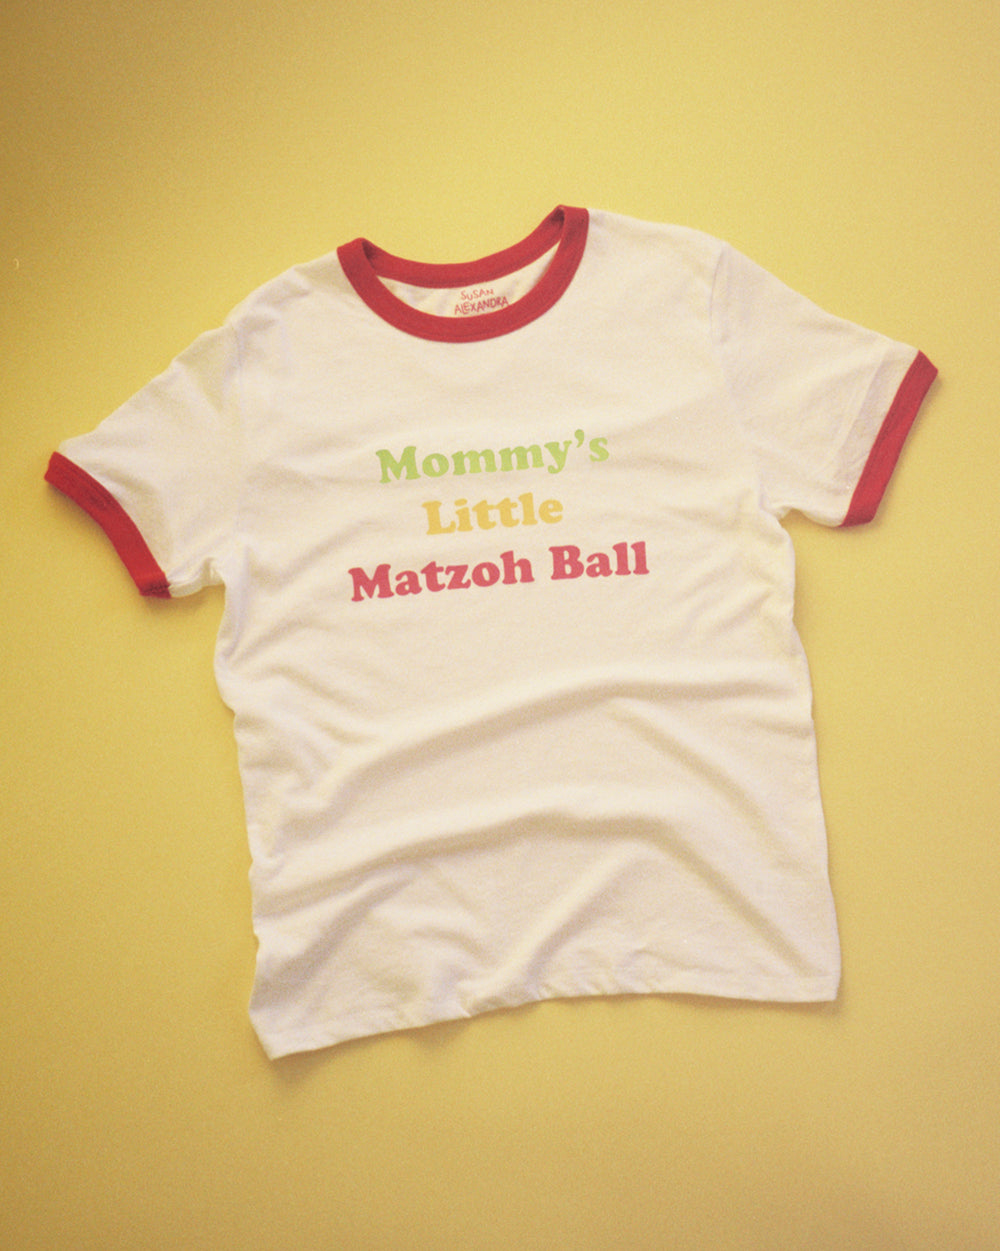 Mommy's Little Matzoh Ball Tee - Adult